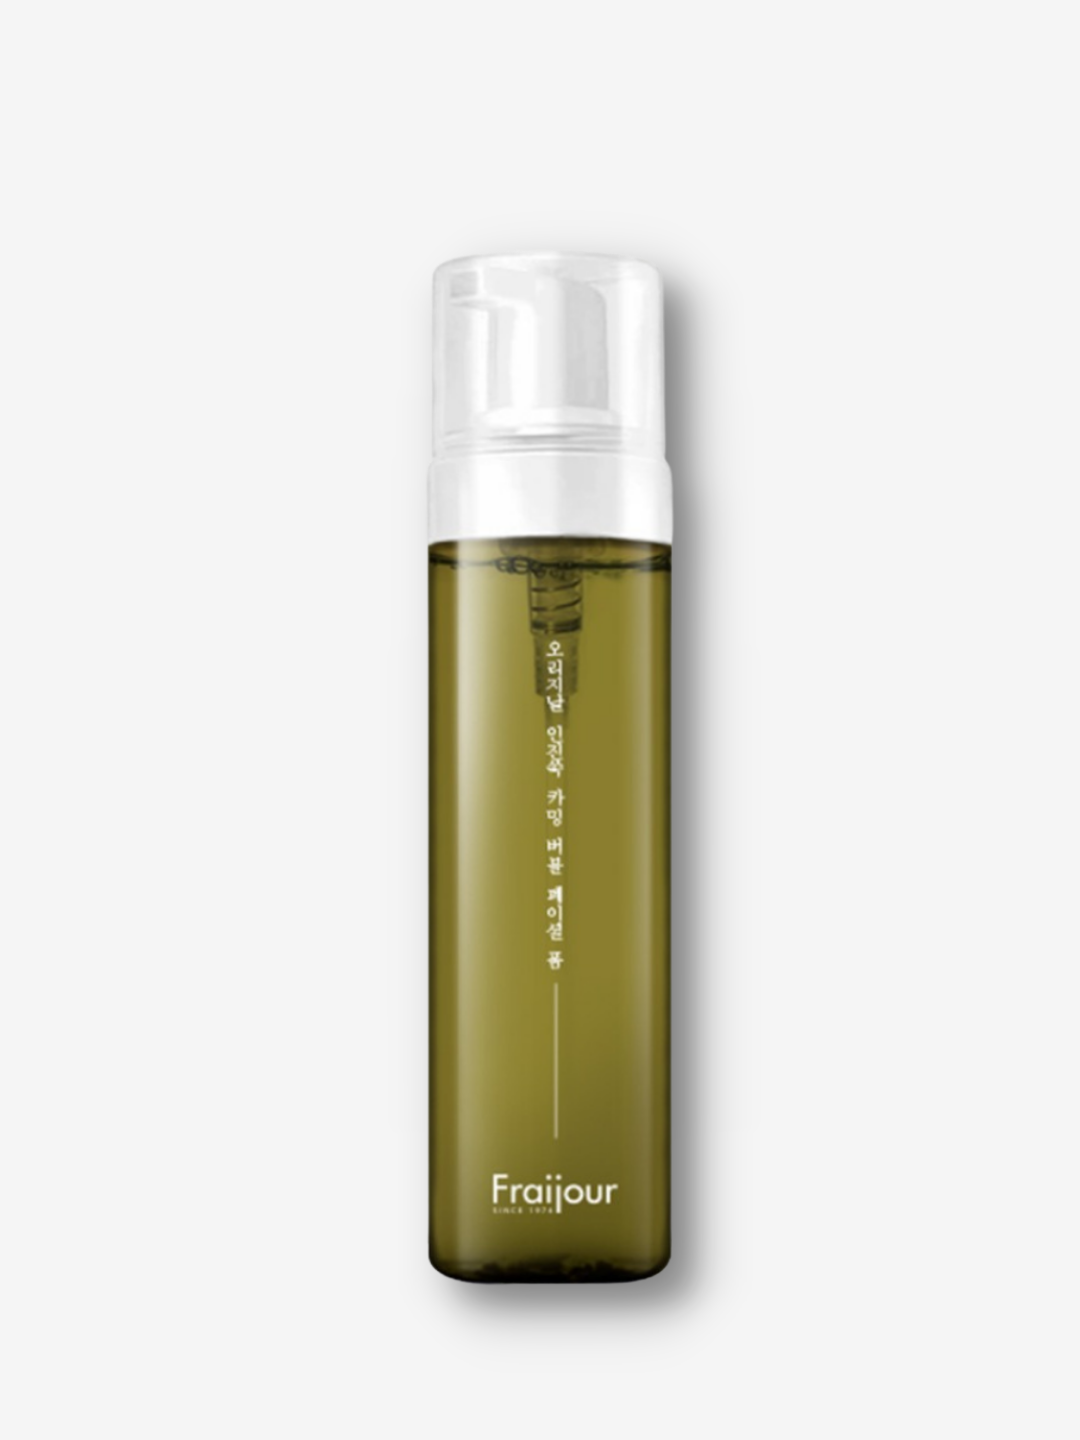 Fraijour - Original Artemisia Bubble Facial Foam - 200ml